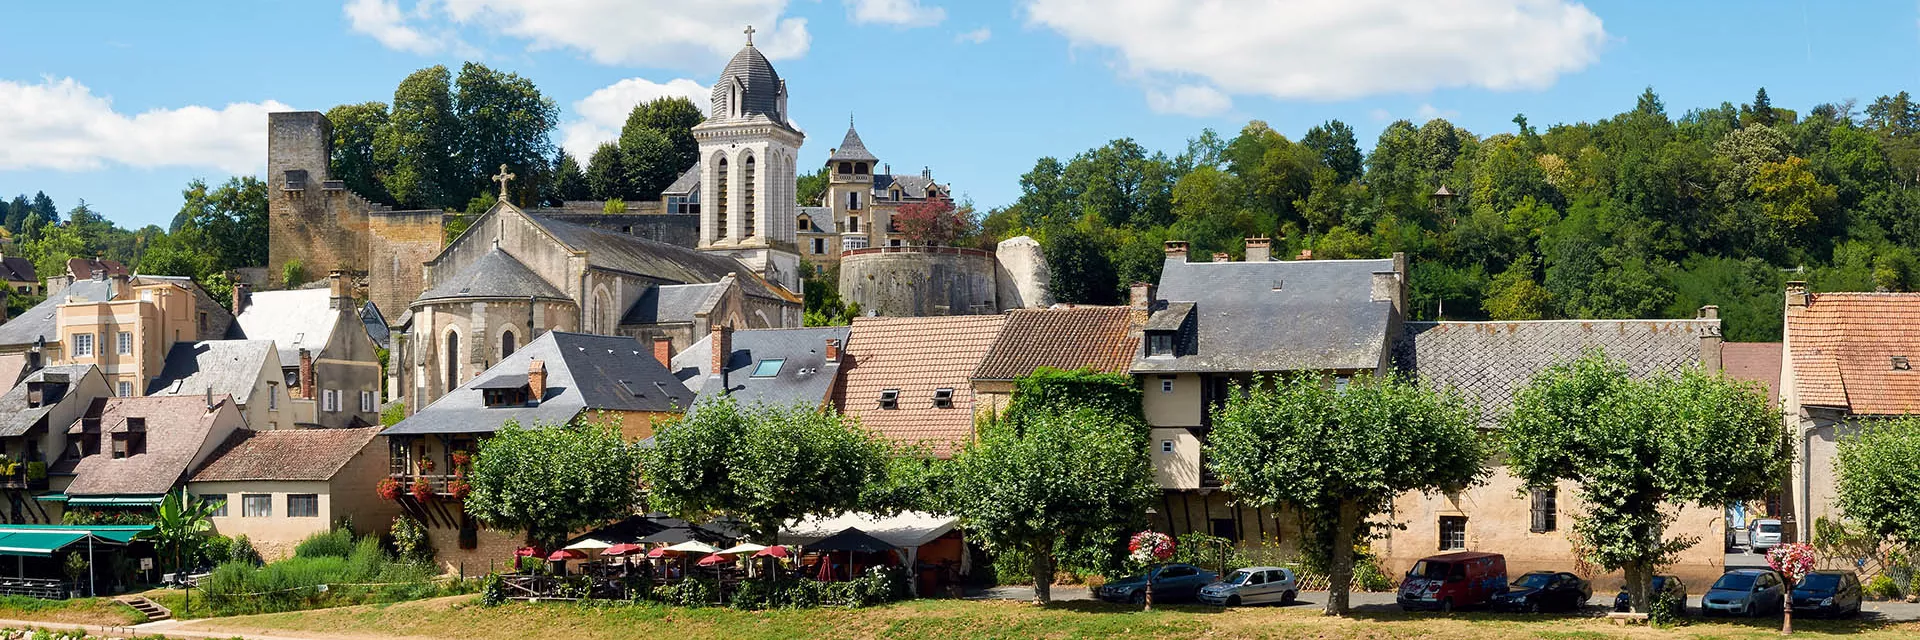 Holiday rentals in Montignac, Dordogne